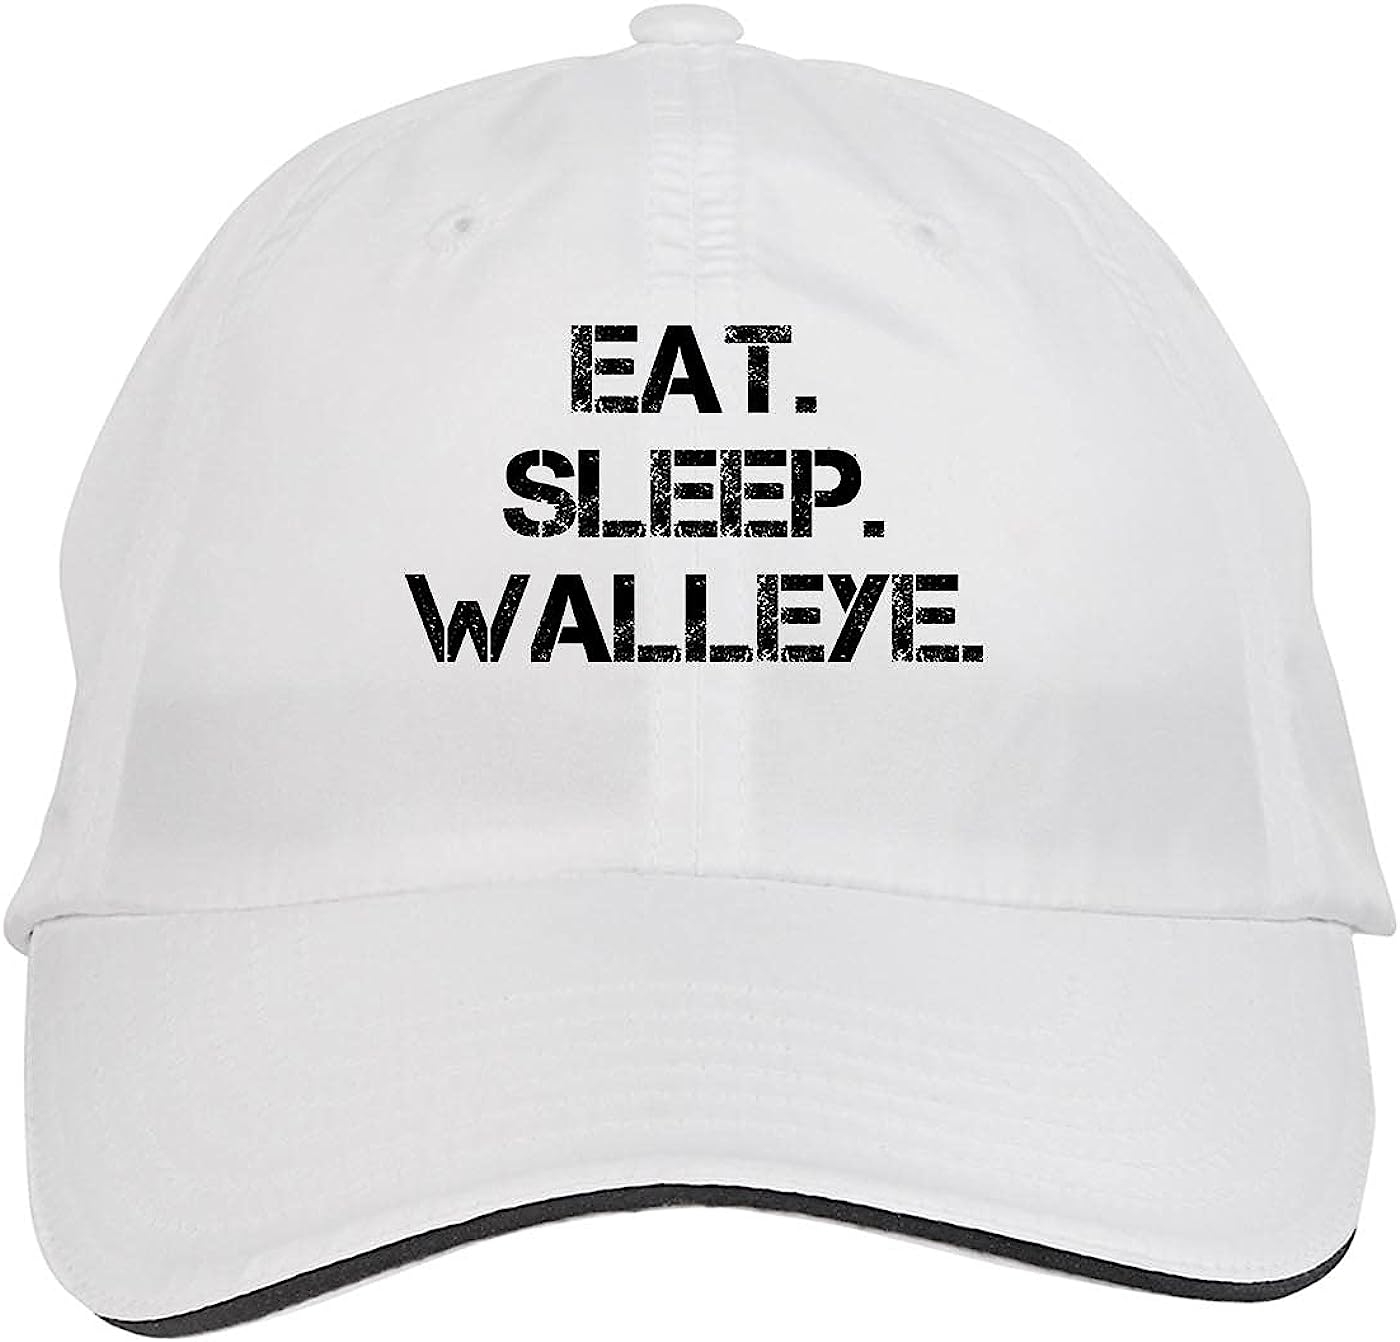 Makoroni – EAT Sleep Walleye Hat Adjustable Cap, DesI52 White   price checker   price checker Description Gallery Reviews